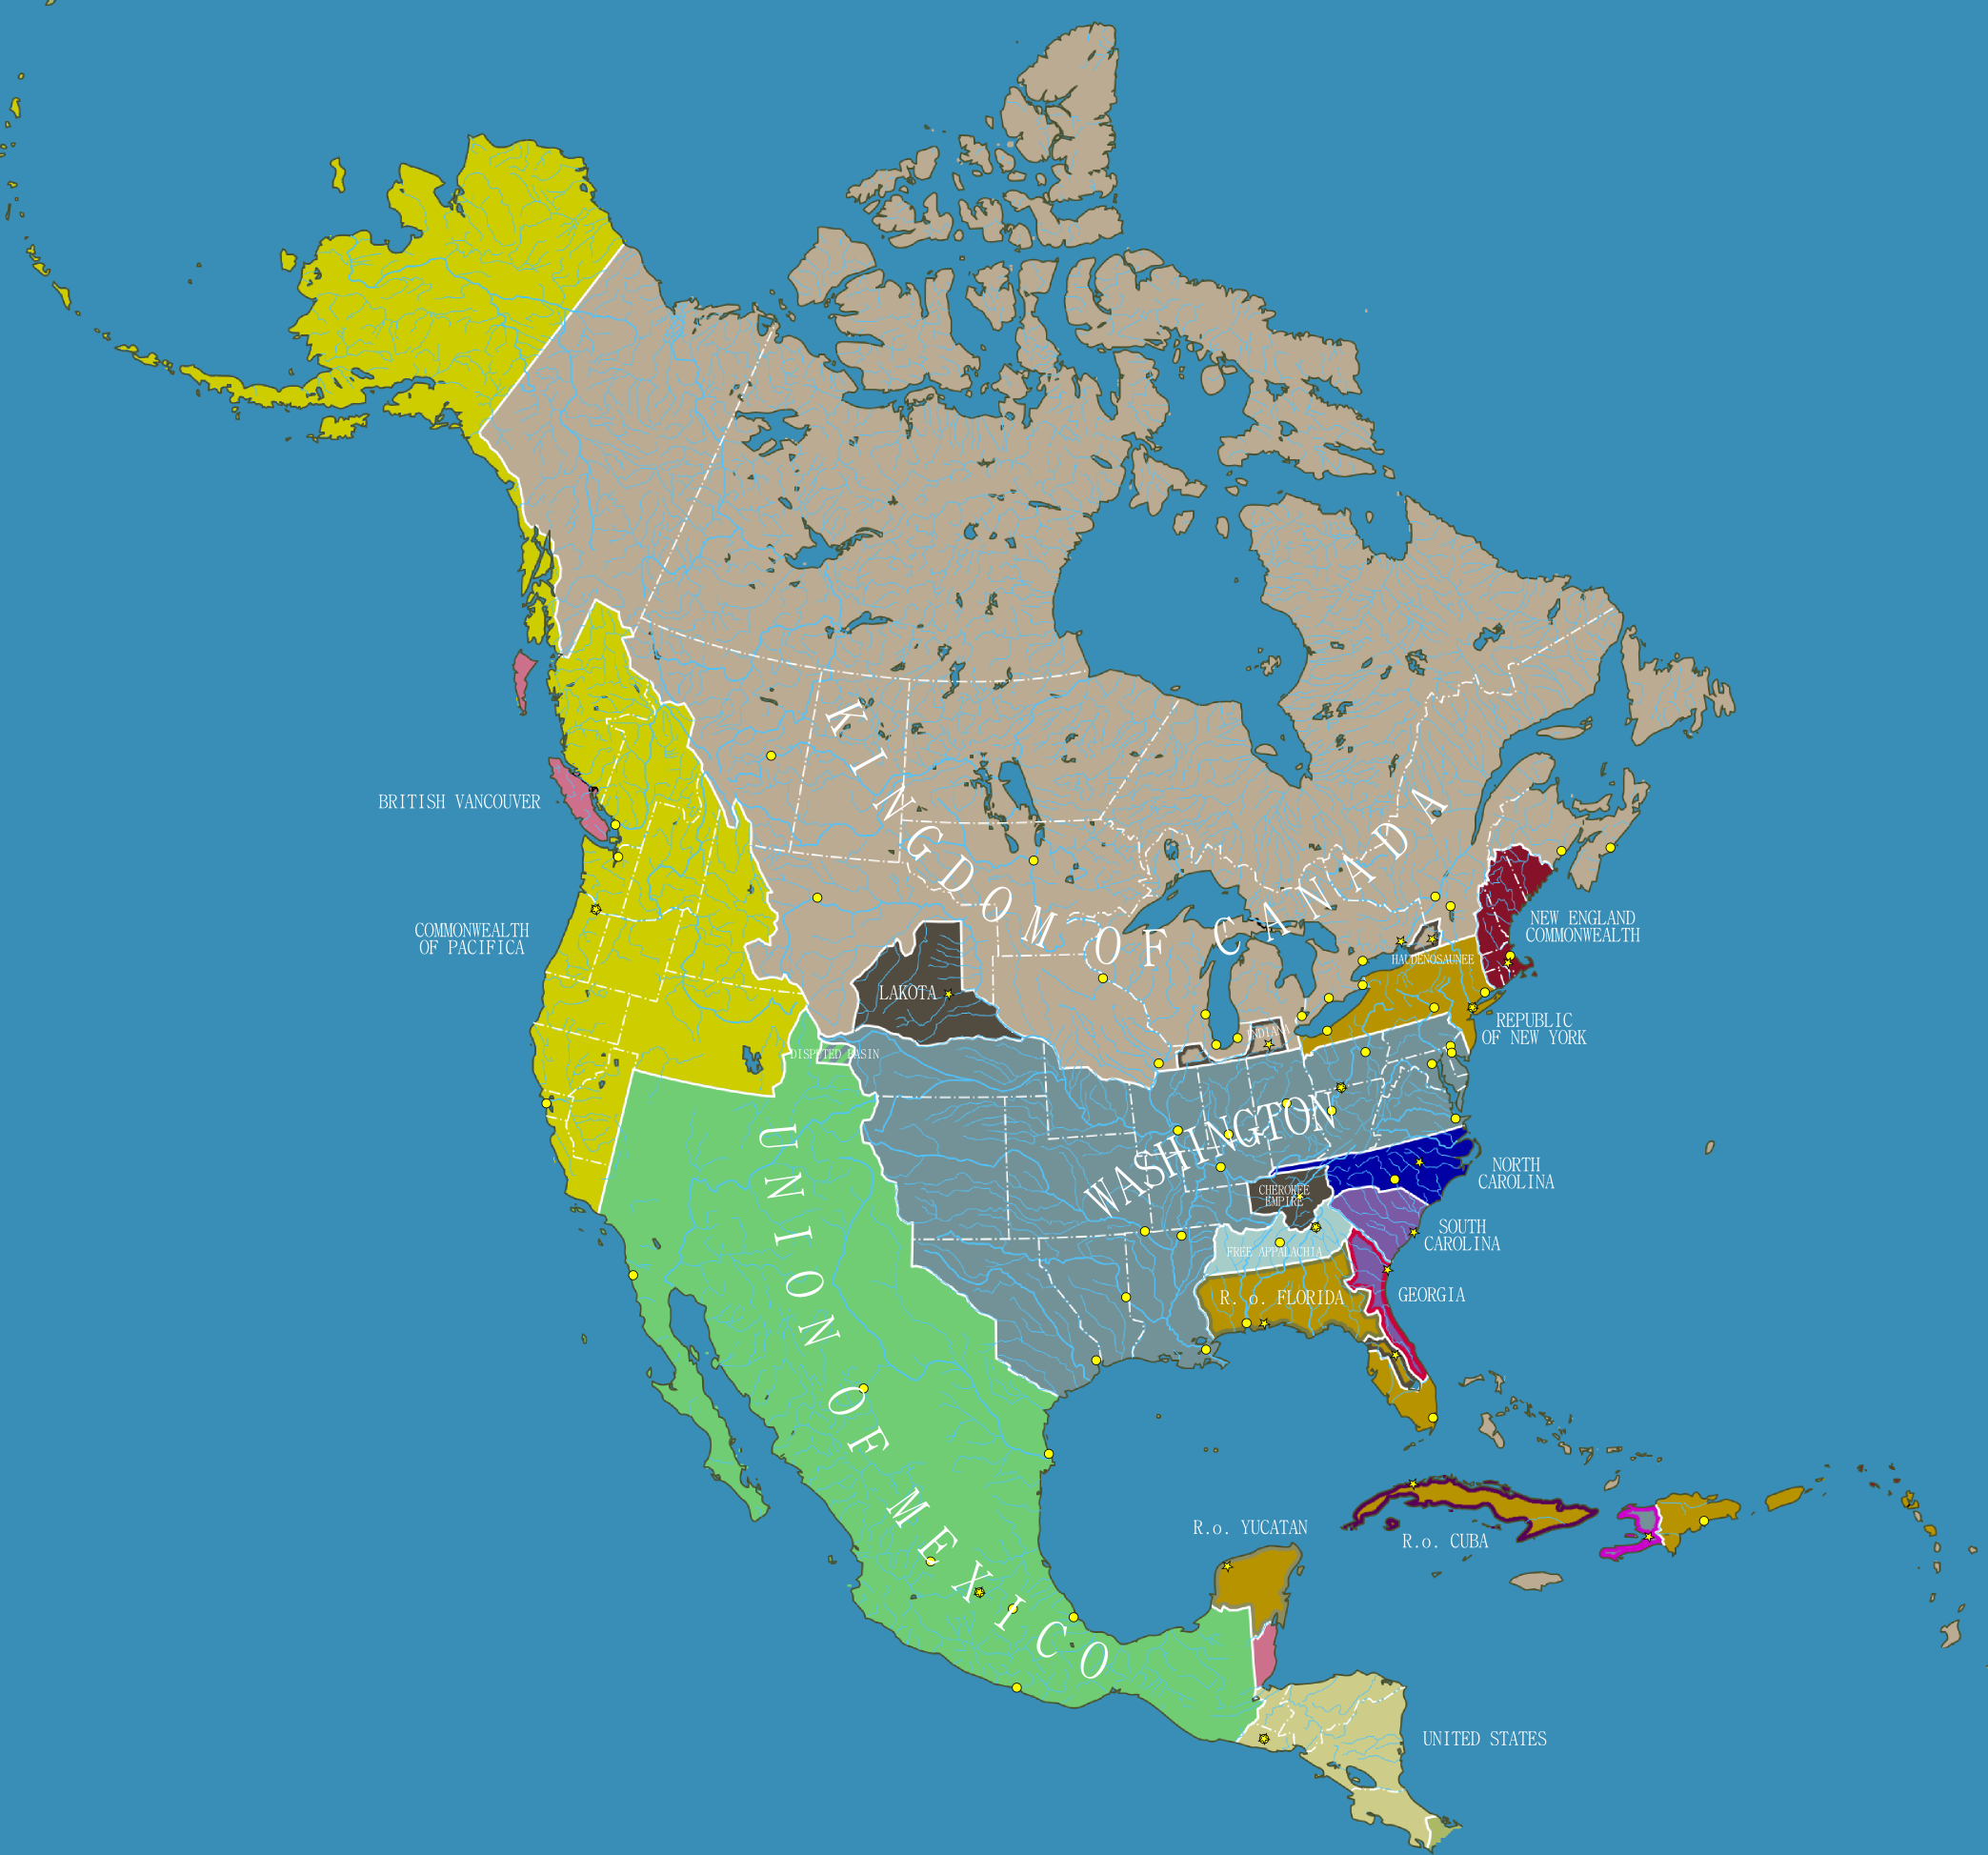 Границы материка Северная Америка. США на карте Северной Америки. Материк Северная Америка на карте со странами. Северная америка работа с картой